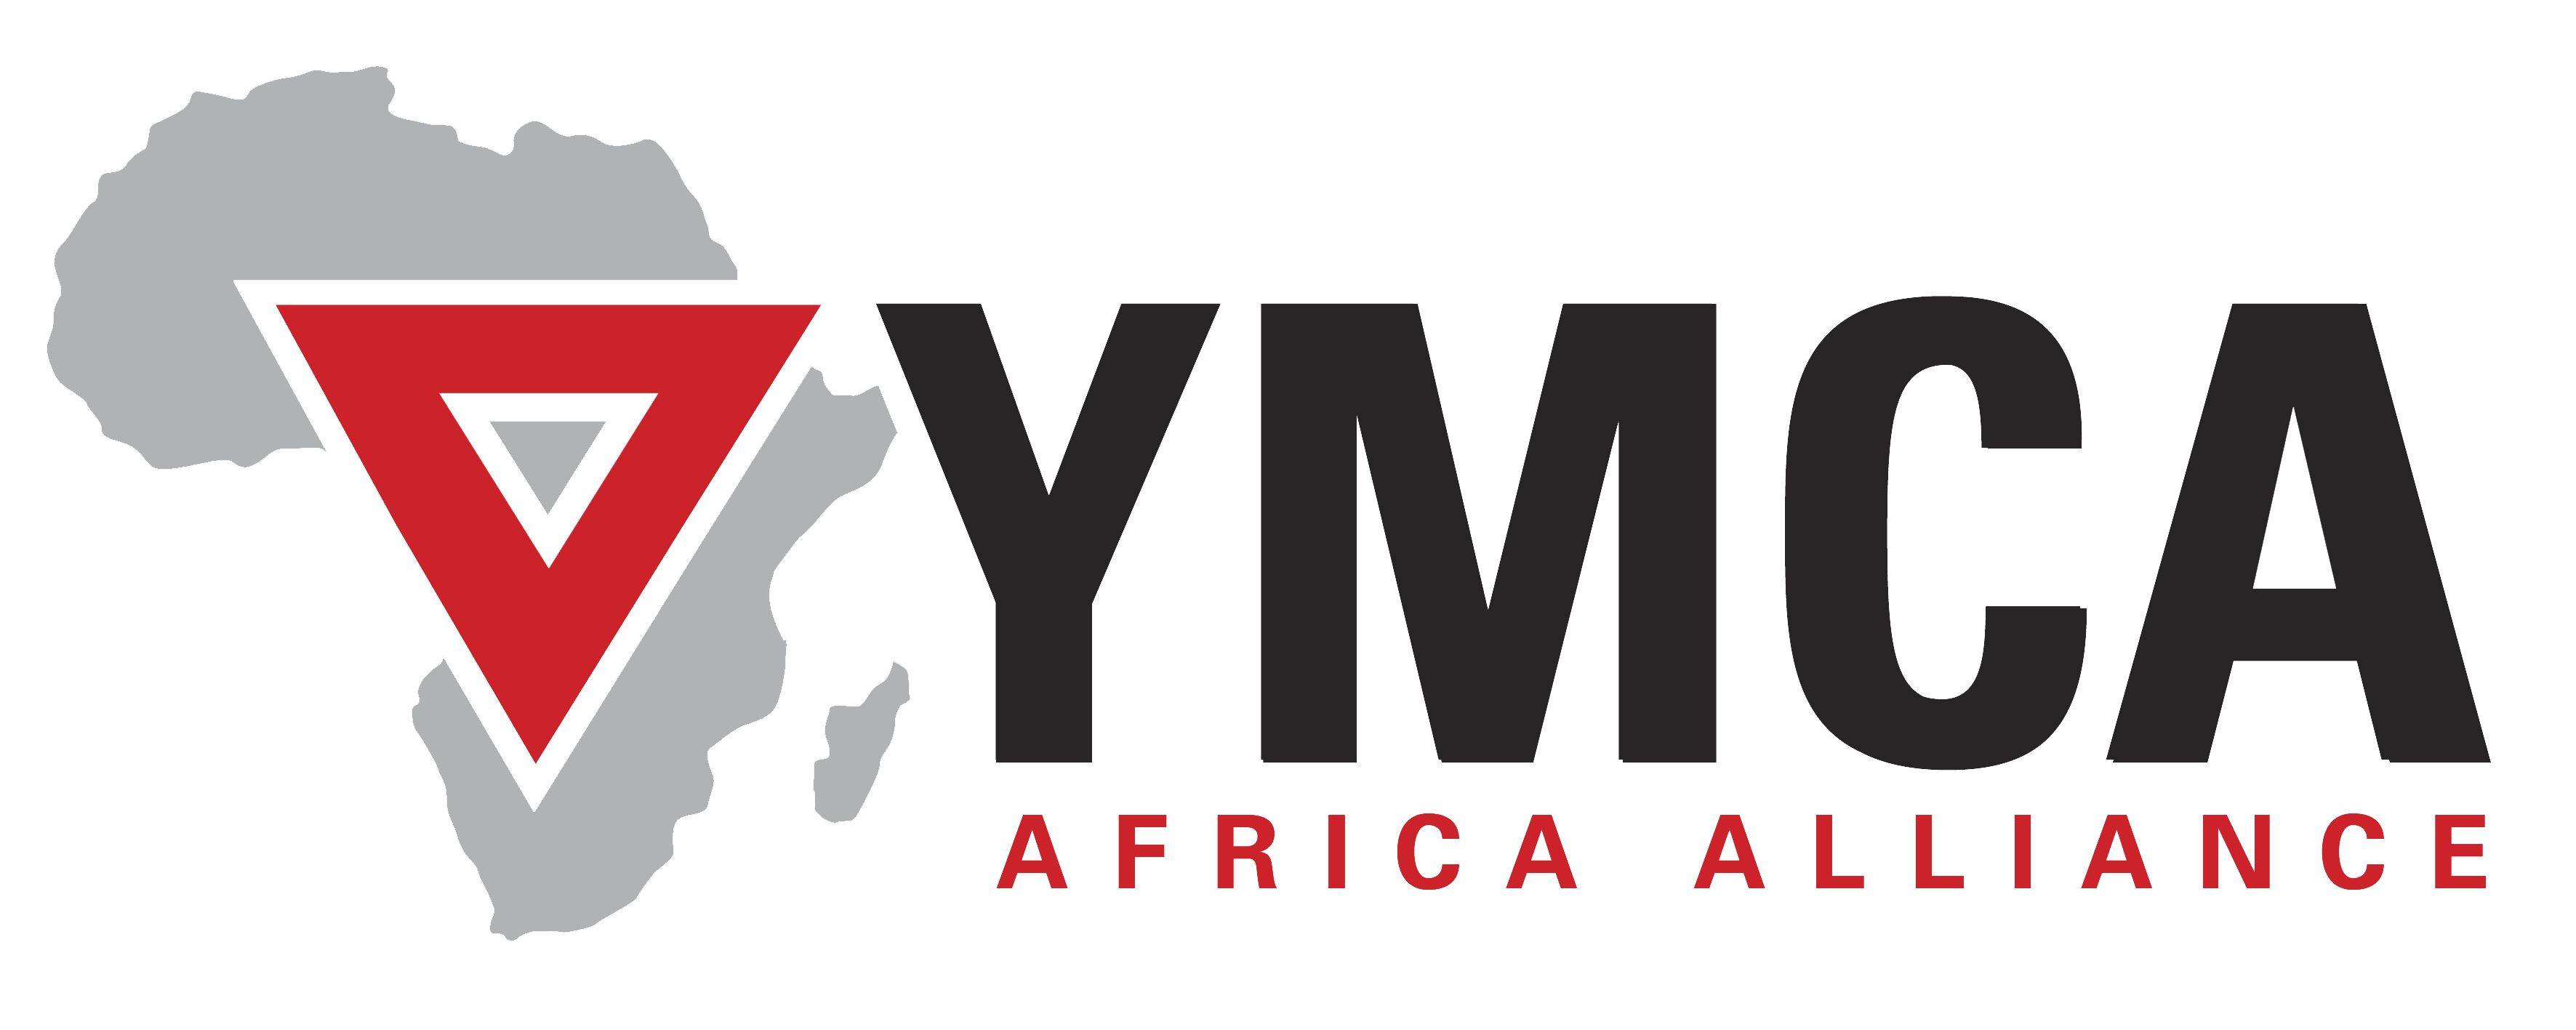 Liberia YMCA S2C Ambassadors develop a youth engagement model